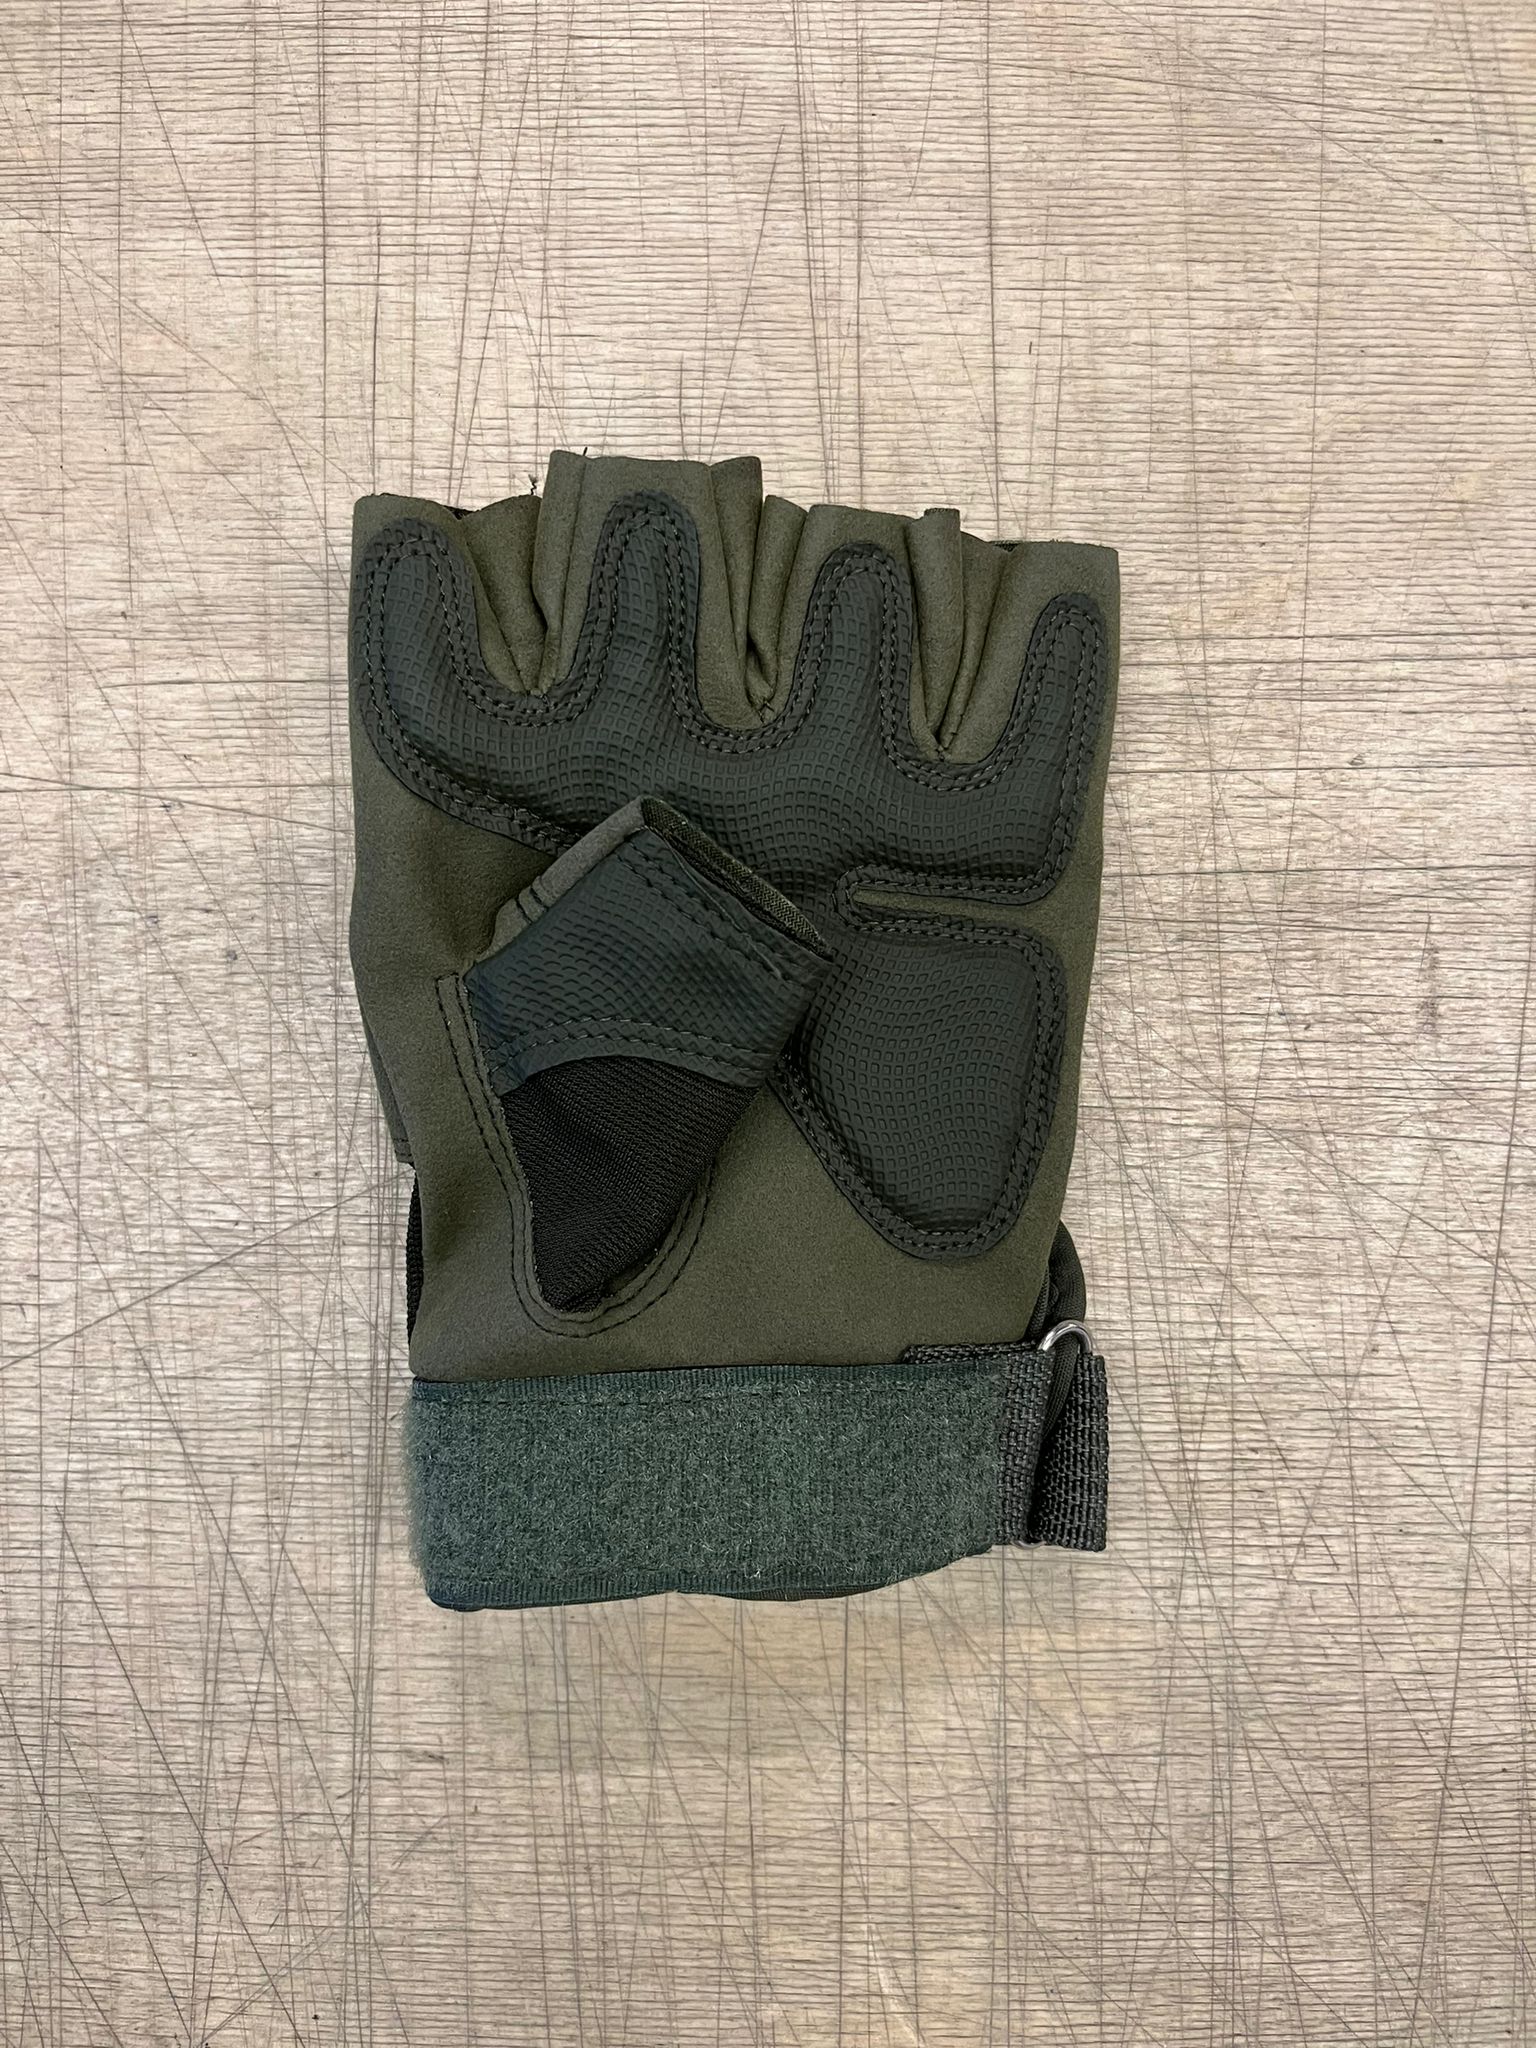 Tactical Gloves Full Finger / Half Finger